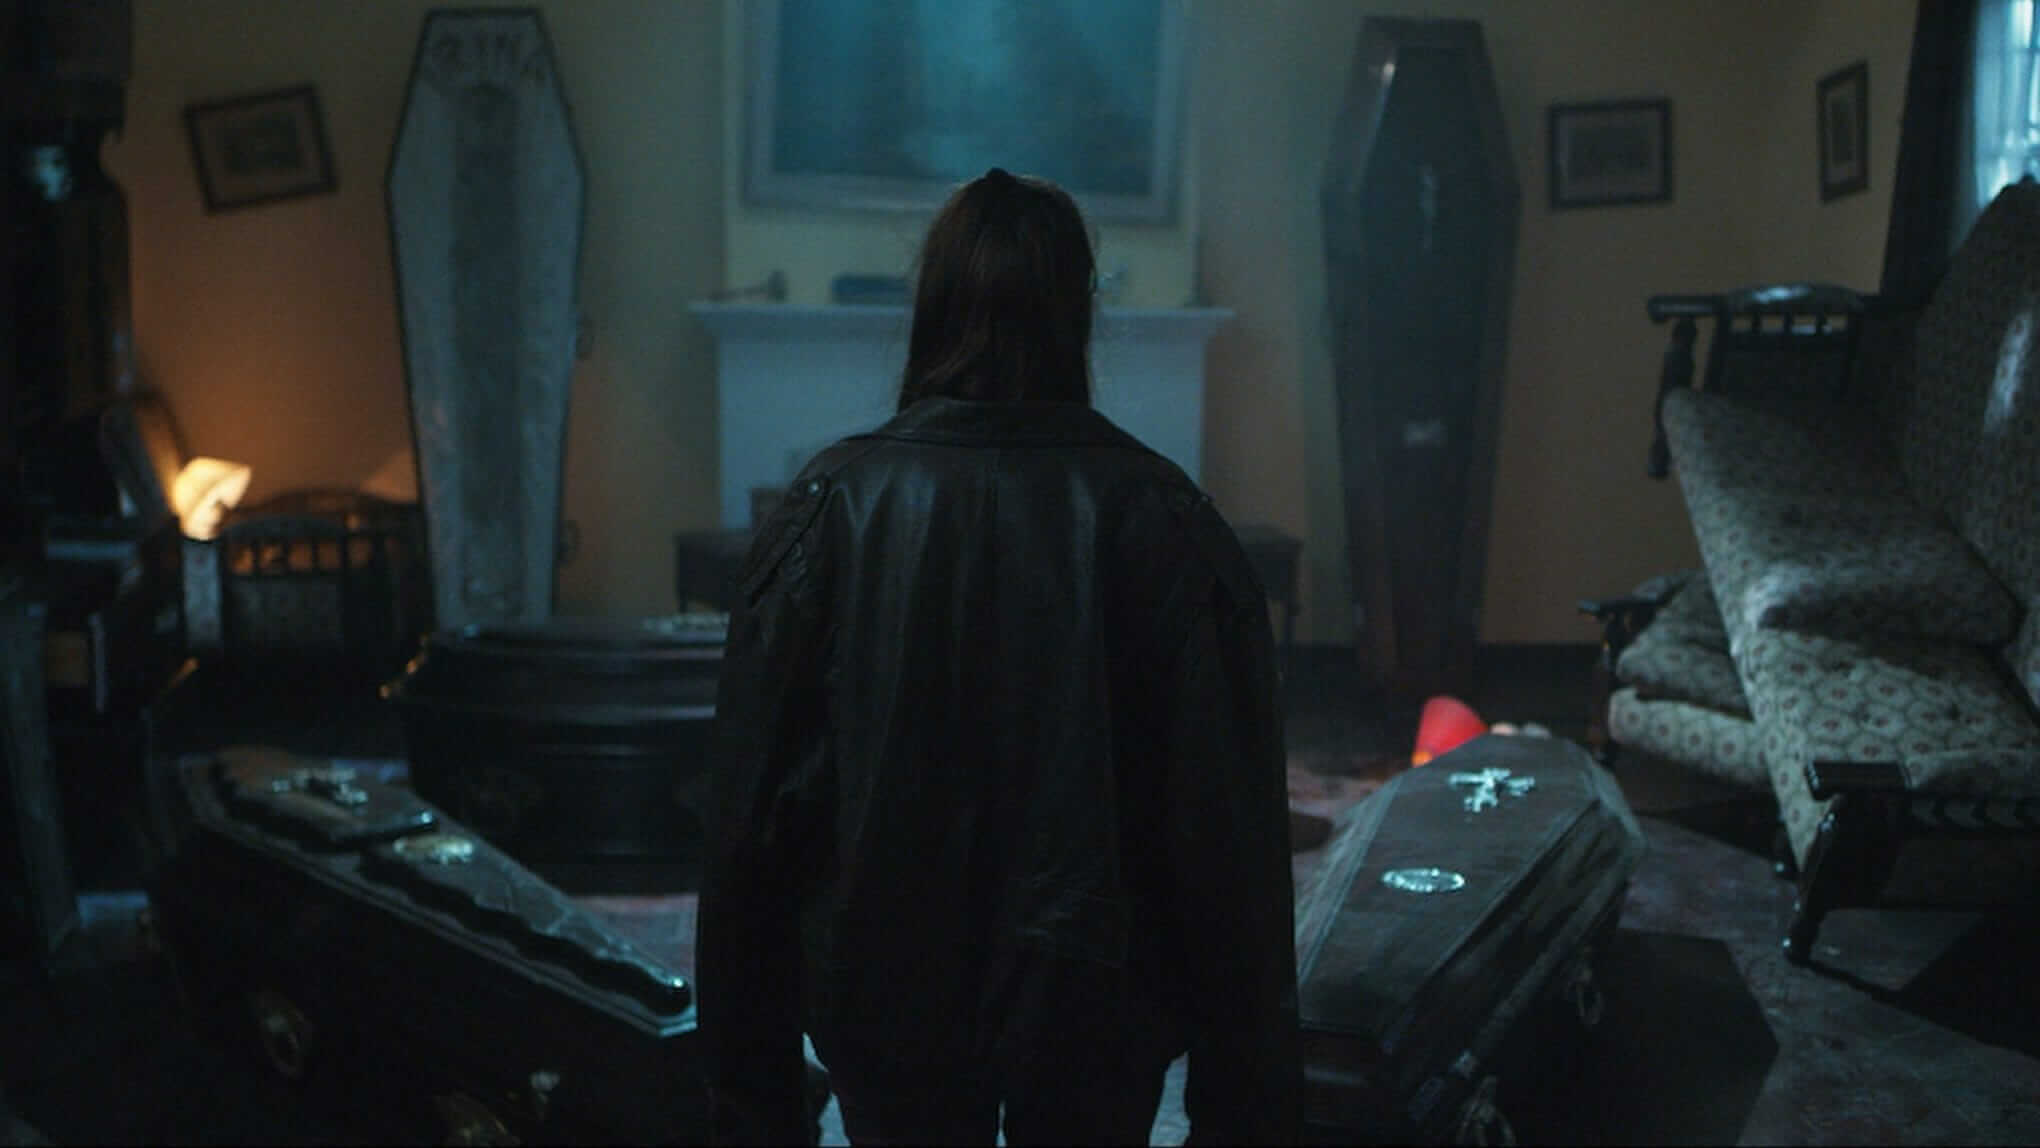 The Undertaker's Home la funeraria review horror movie fantasia 2020